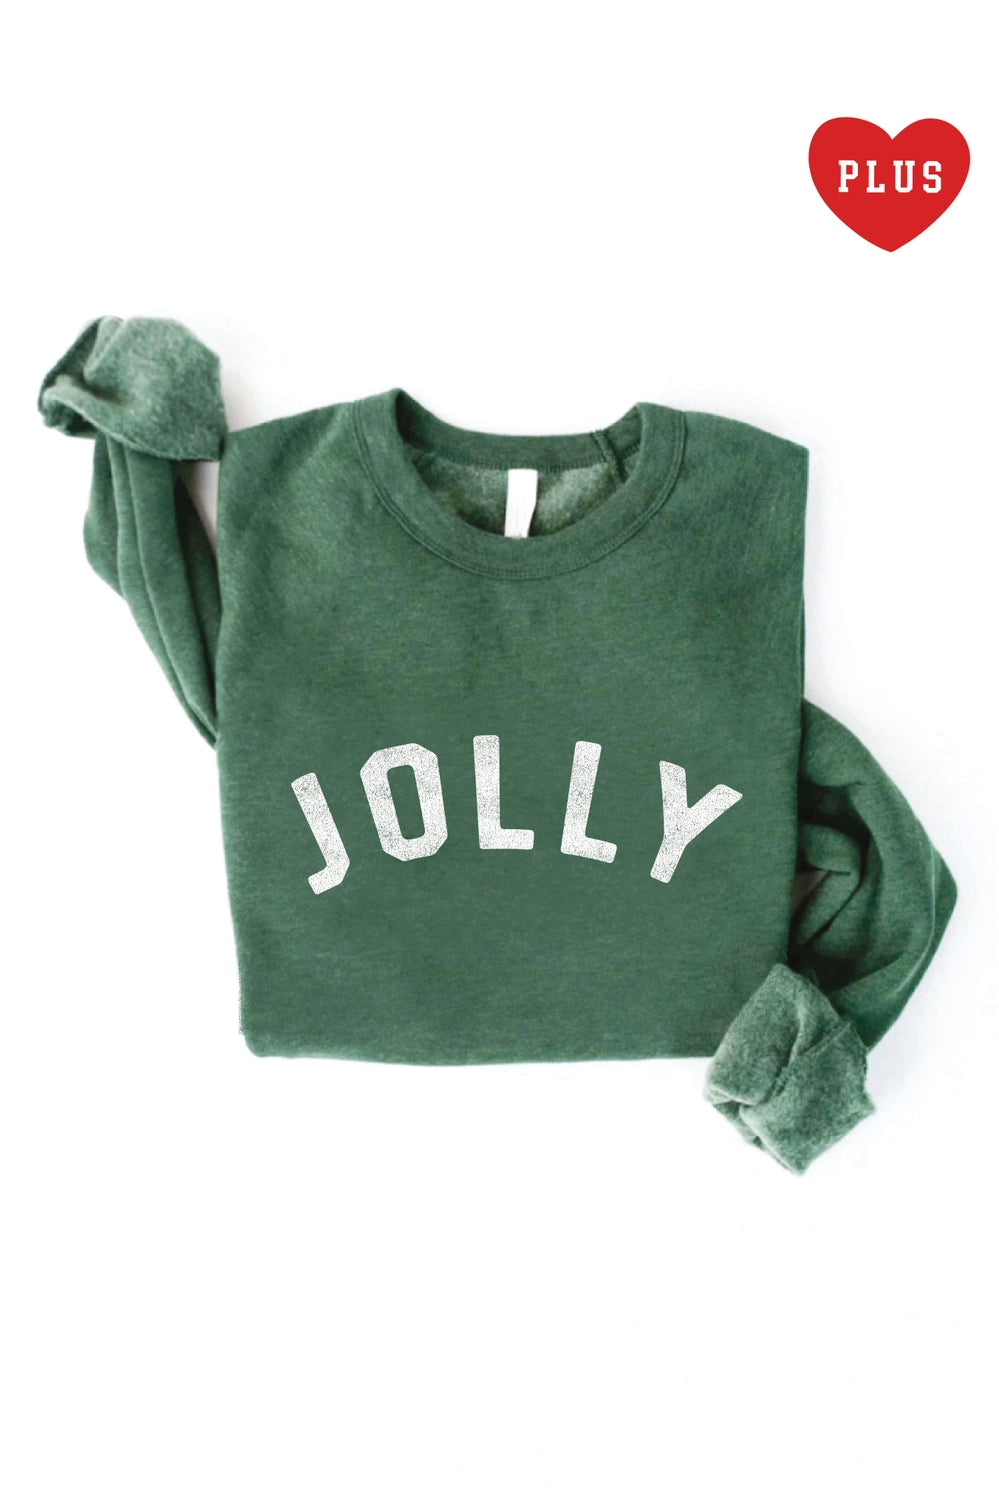 Jolly Women's Graphic Fleece Sweatshirt, Heather Forest